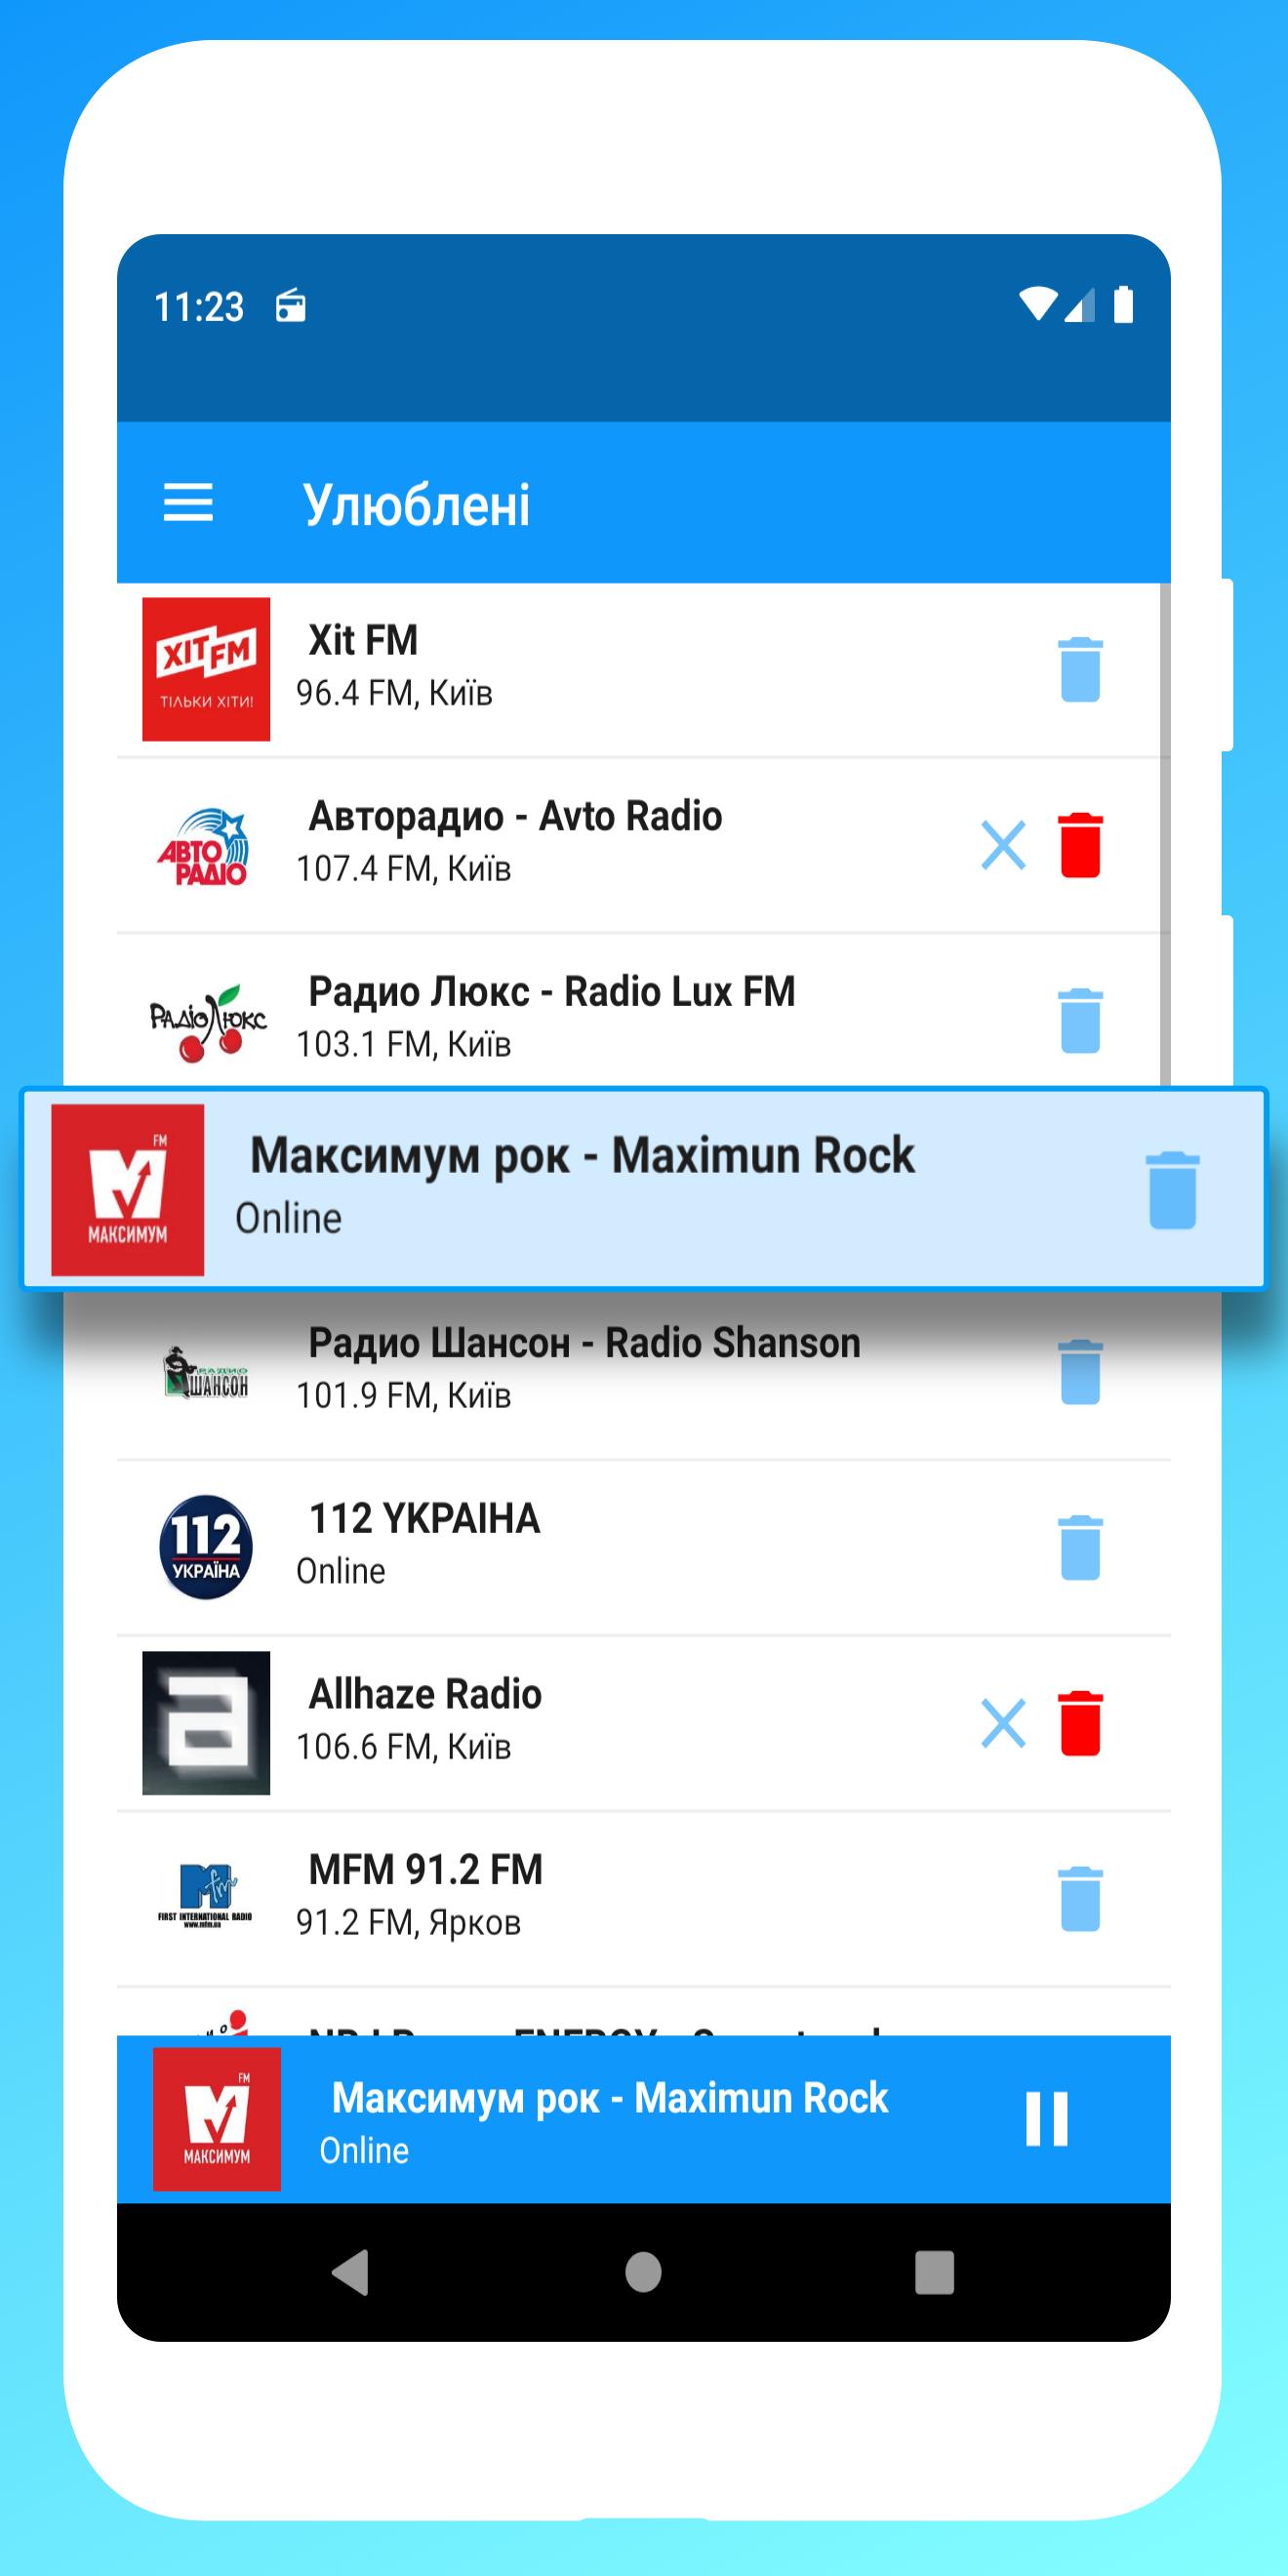 Radio Ukraine FM - Online Radio. Free Radio App for Android - APK Download